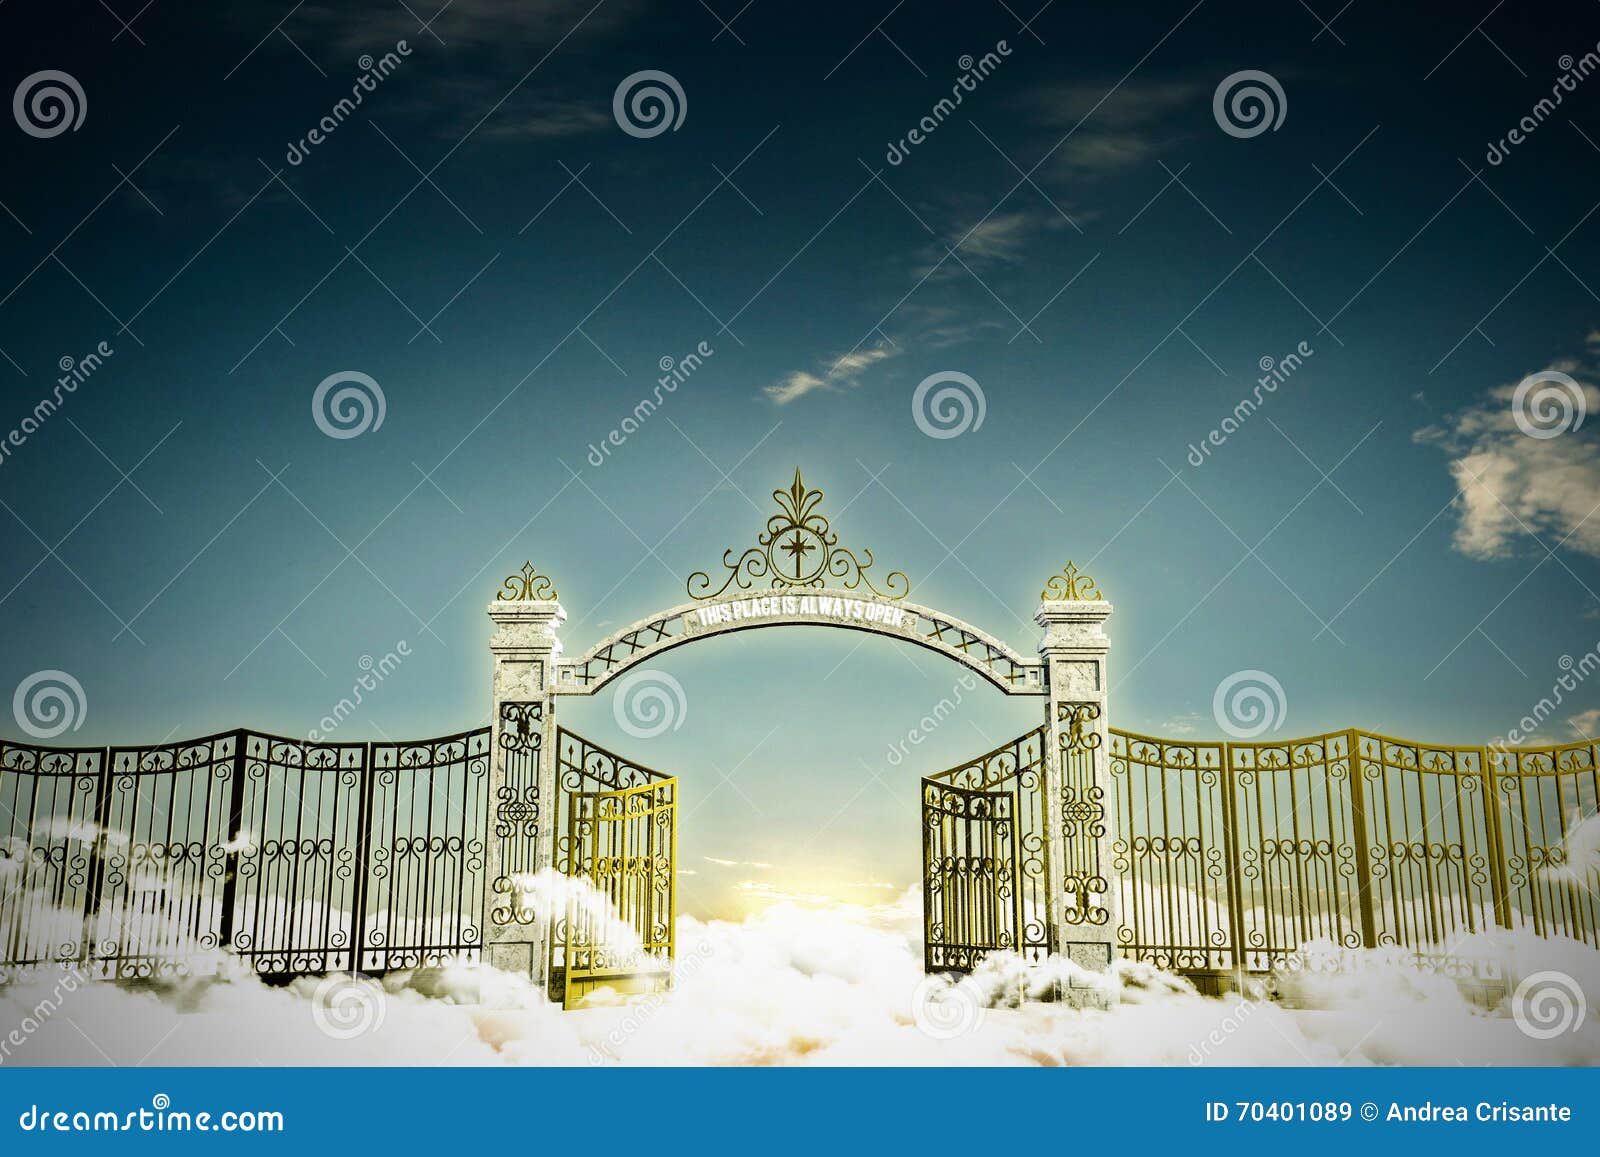 haven gate